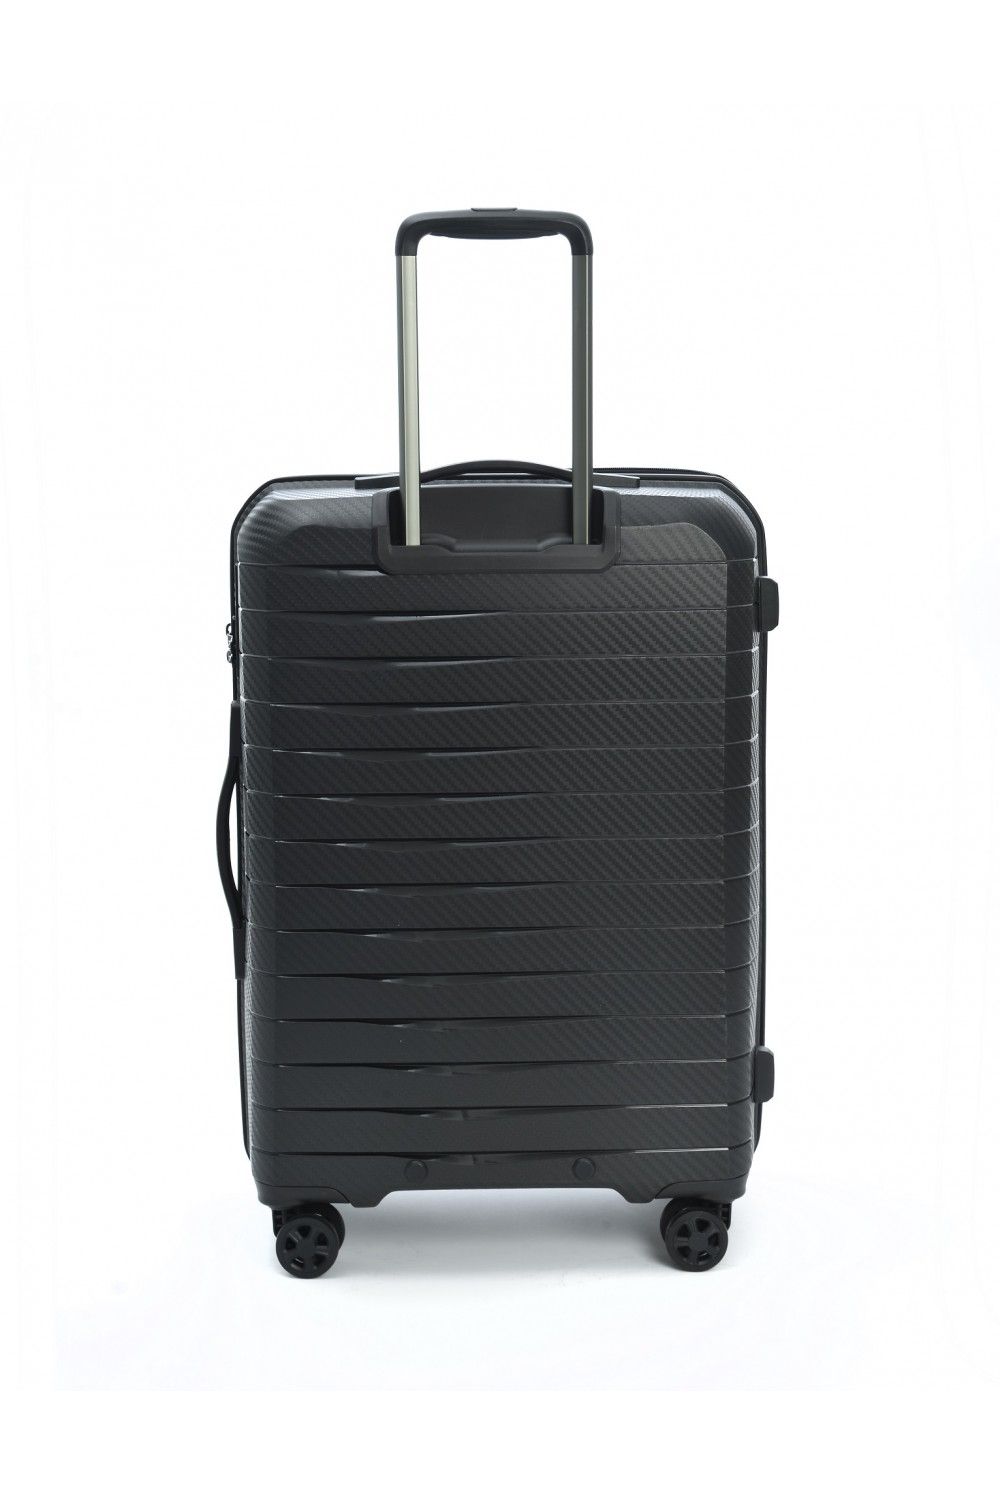 Suitcase Medium AIRBOX AZ18 66cm 4 wheels black